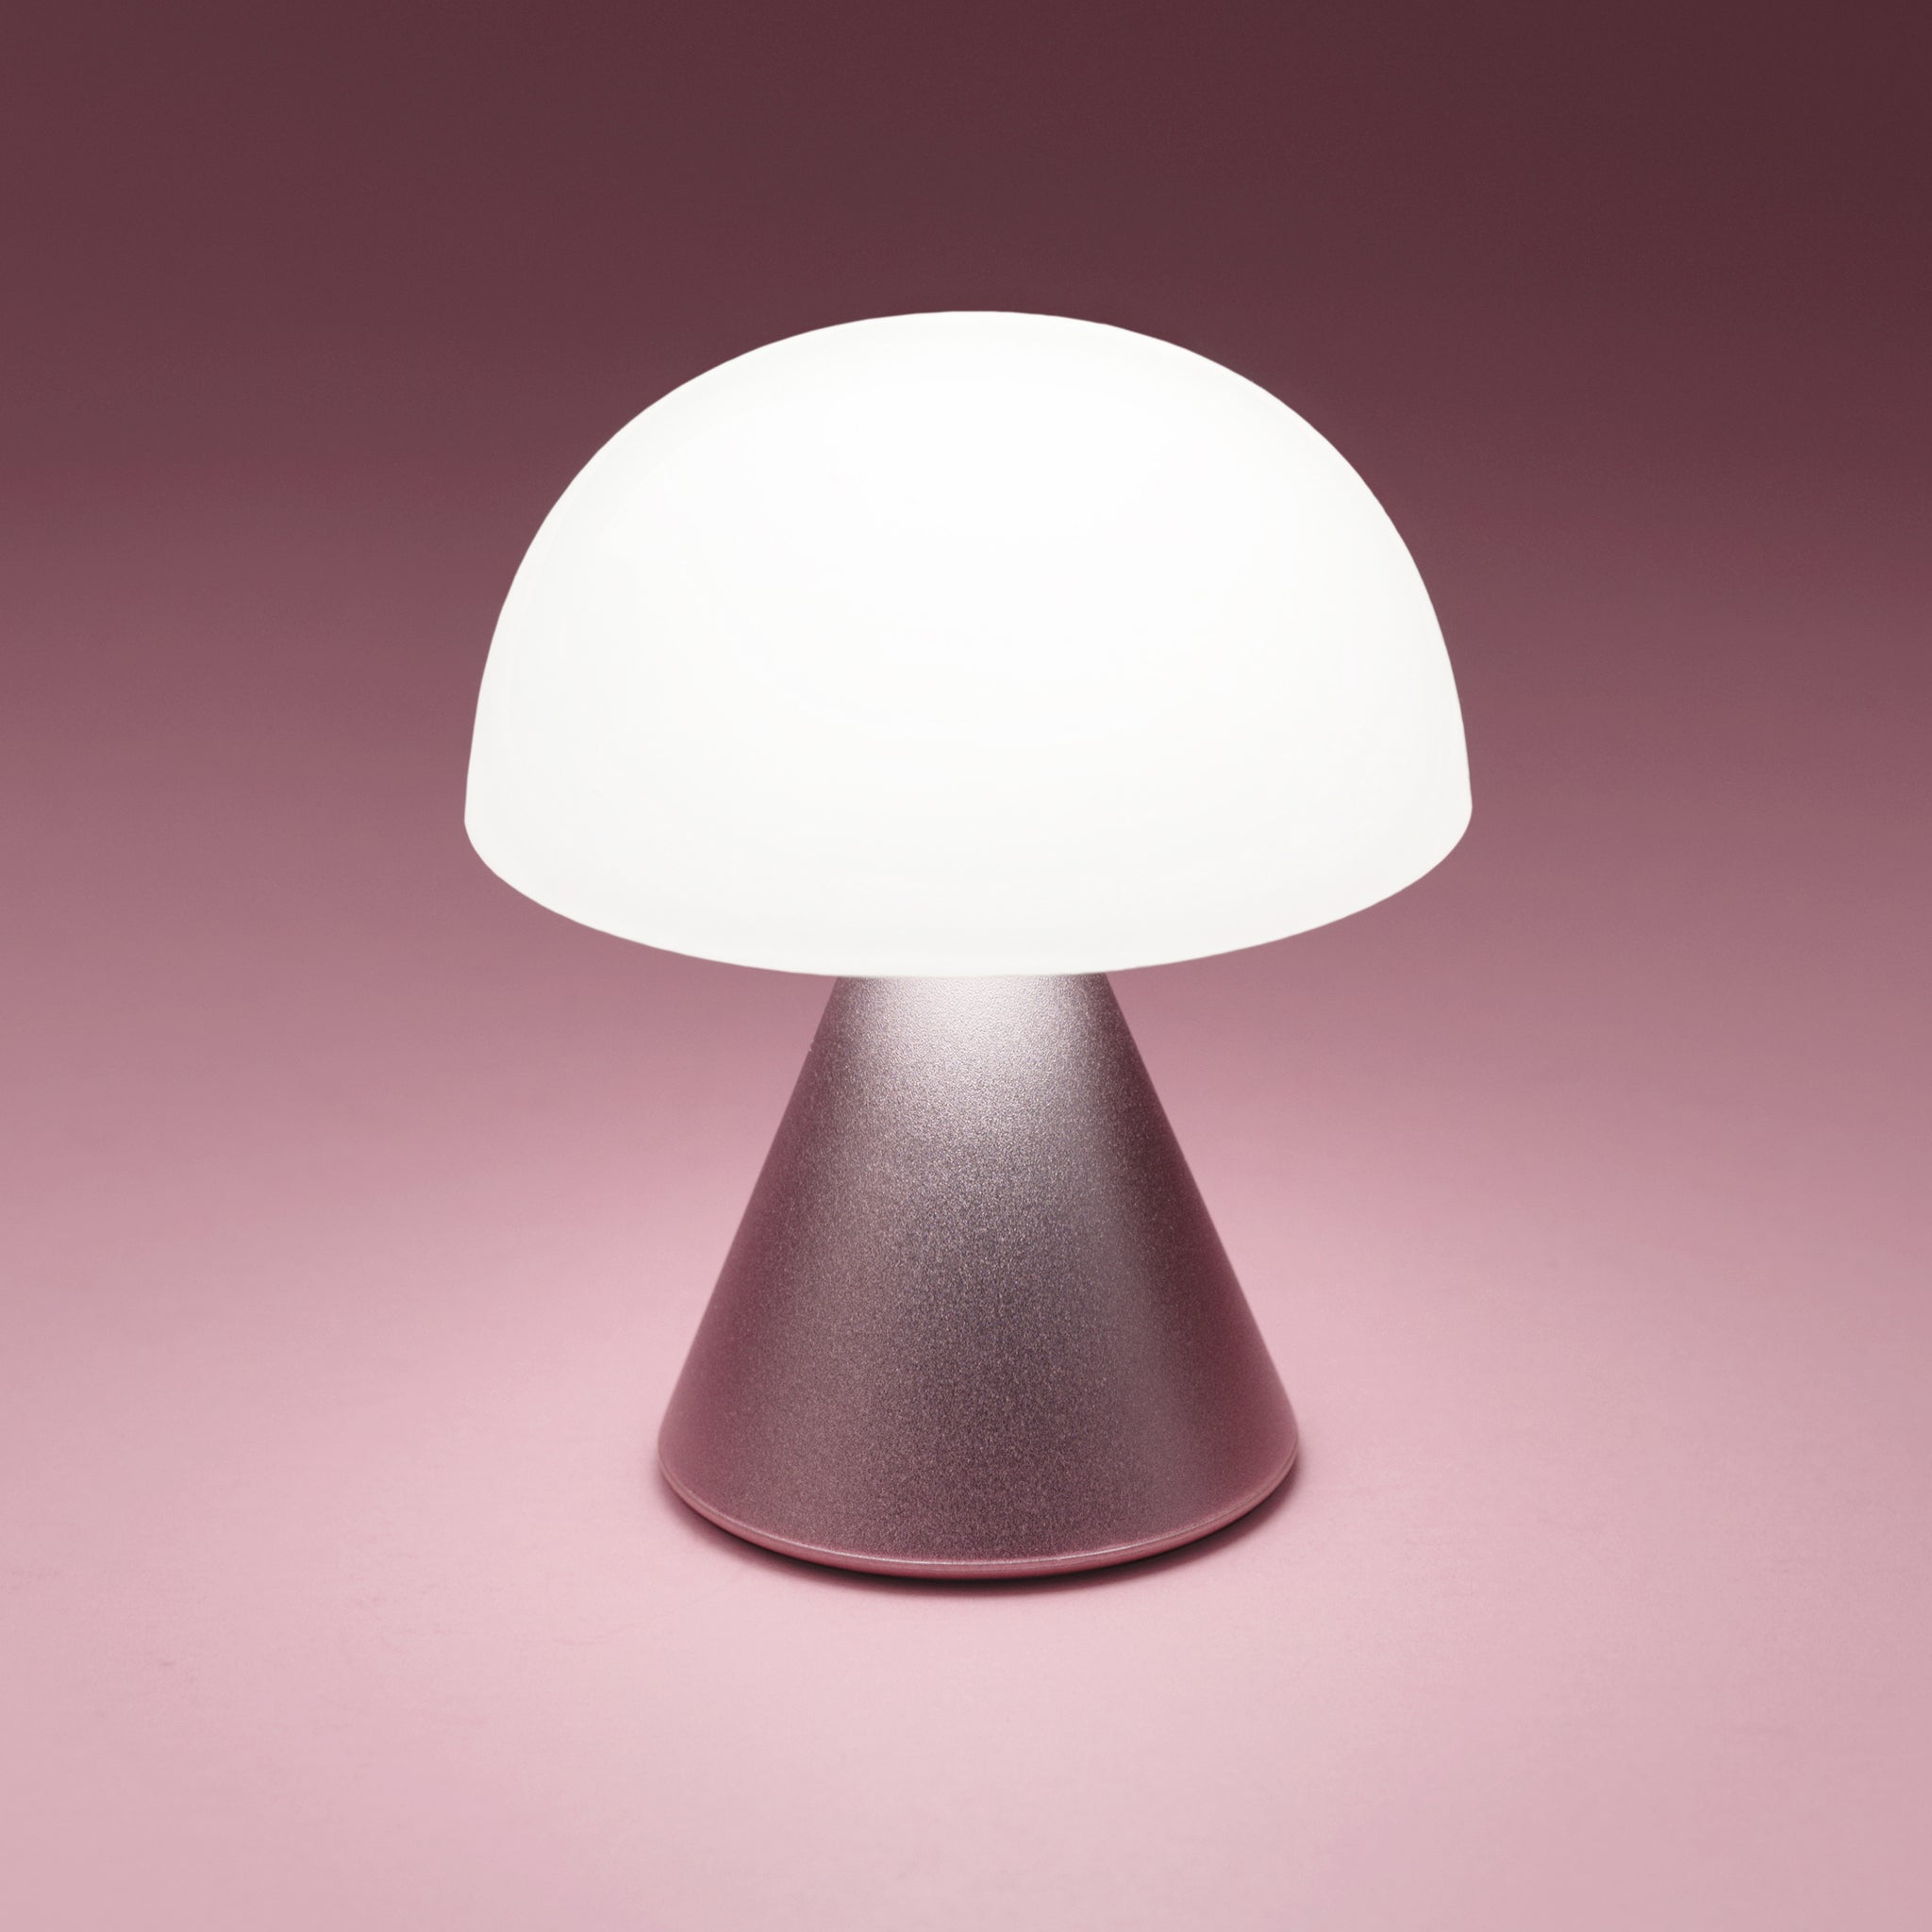 Lexon Mina Small Roze│Oplaadbare LED lamp│art. LH60MLP│wit licht aan met roze achtergrond